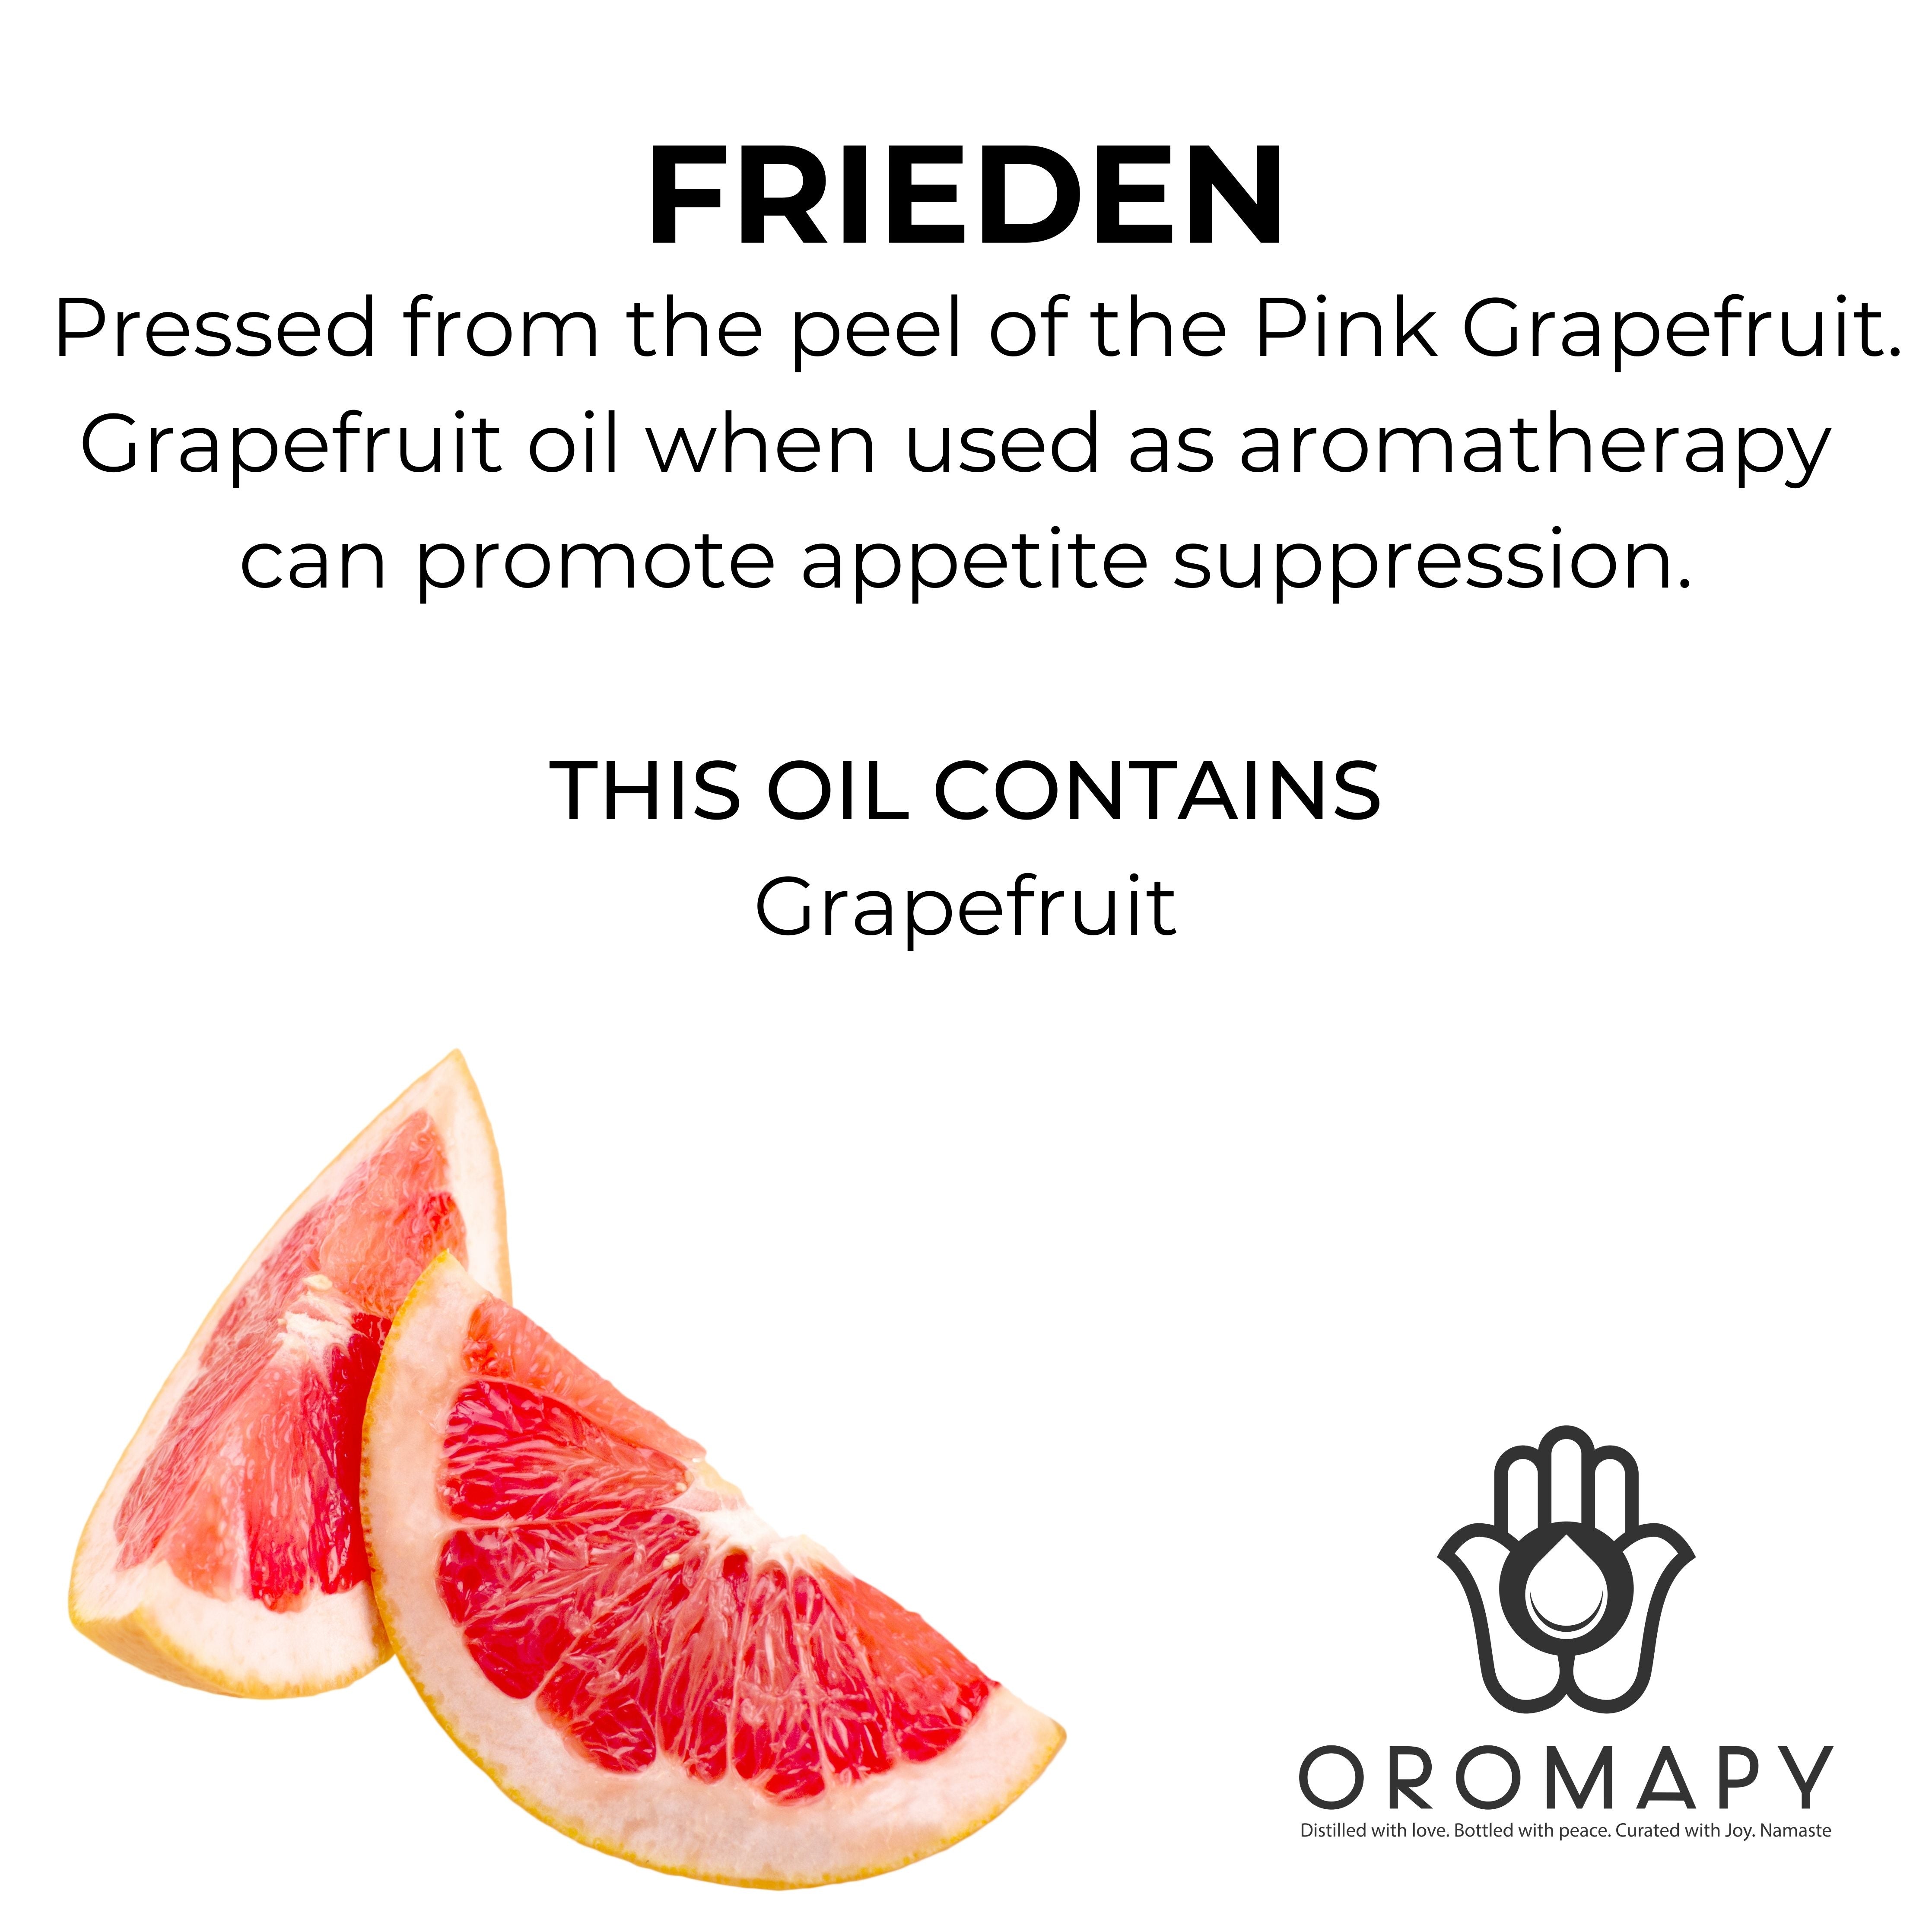 Benefits of Pink Grapefruit Essential Oil